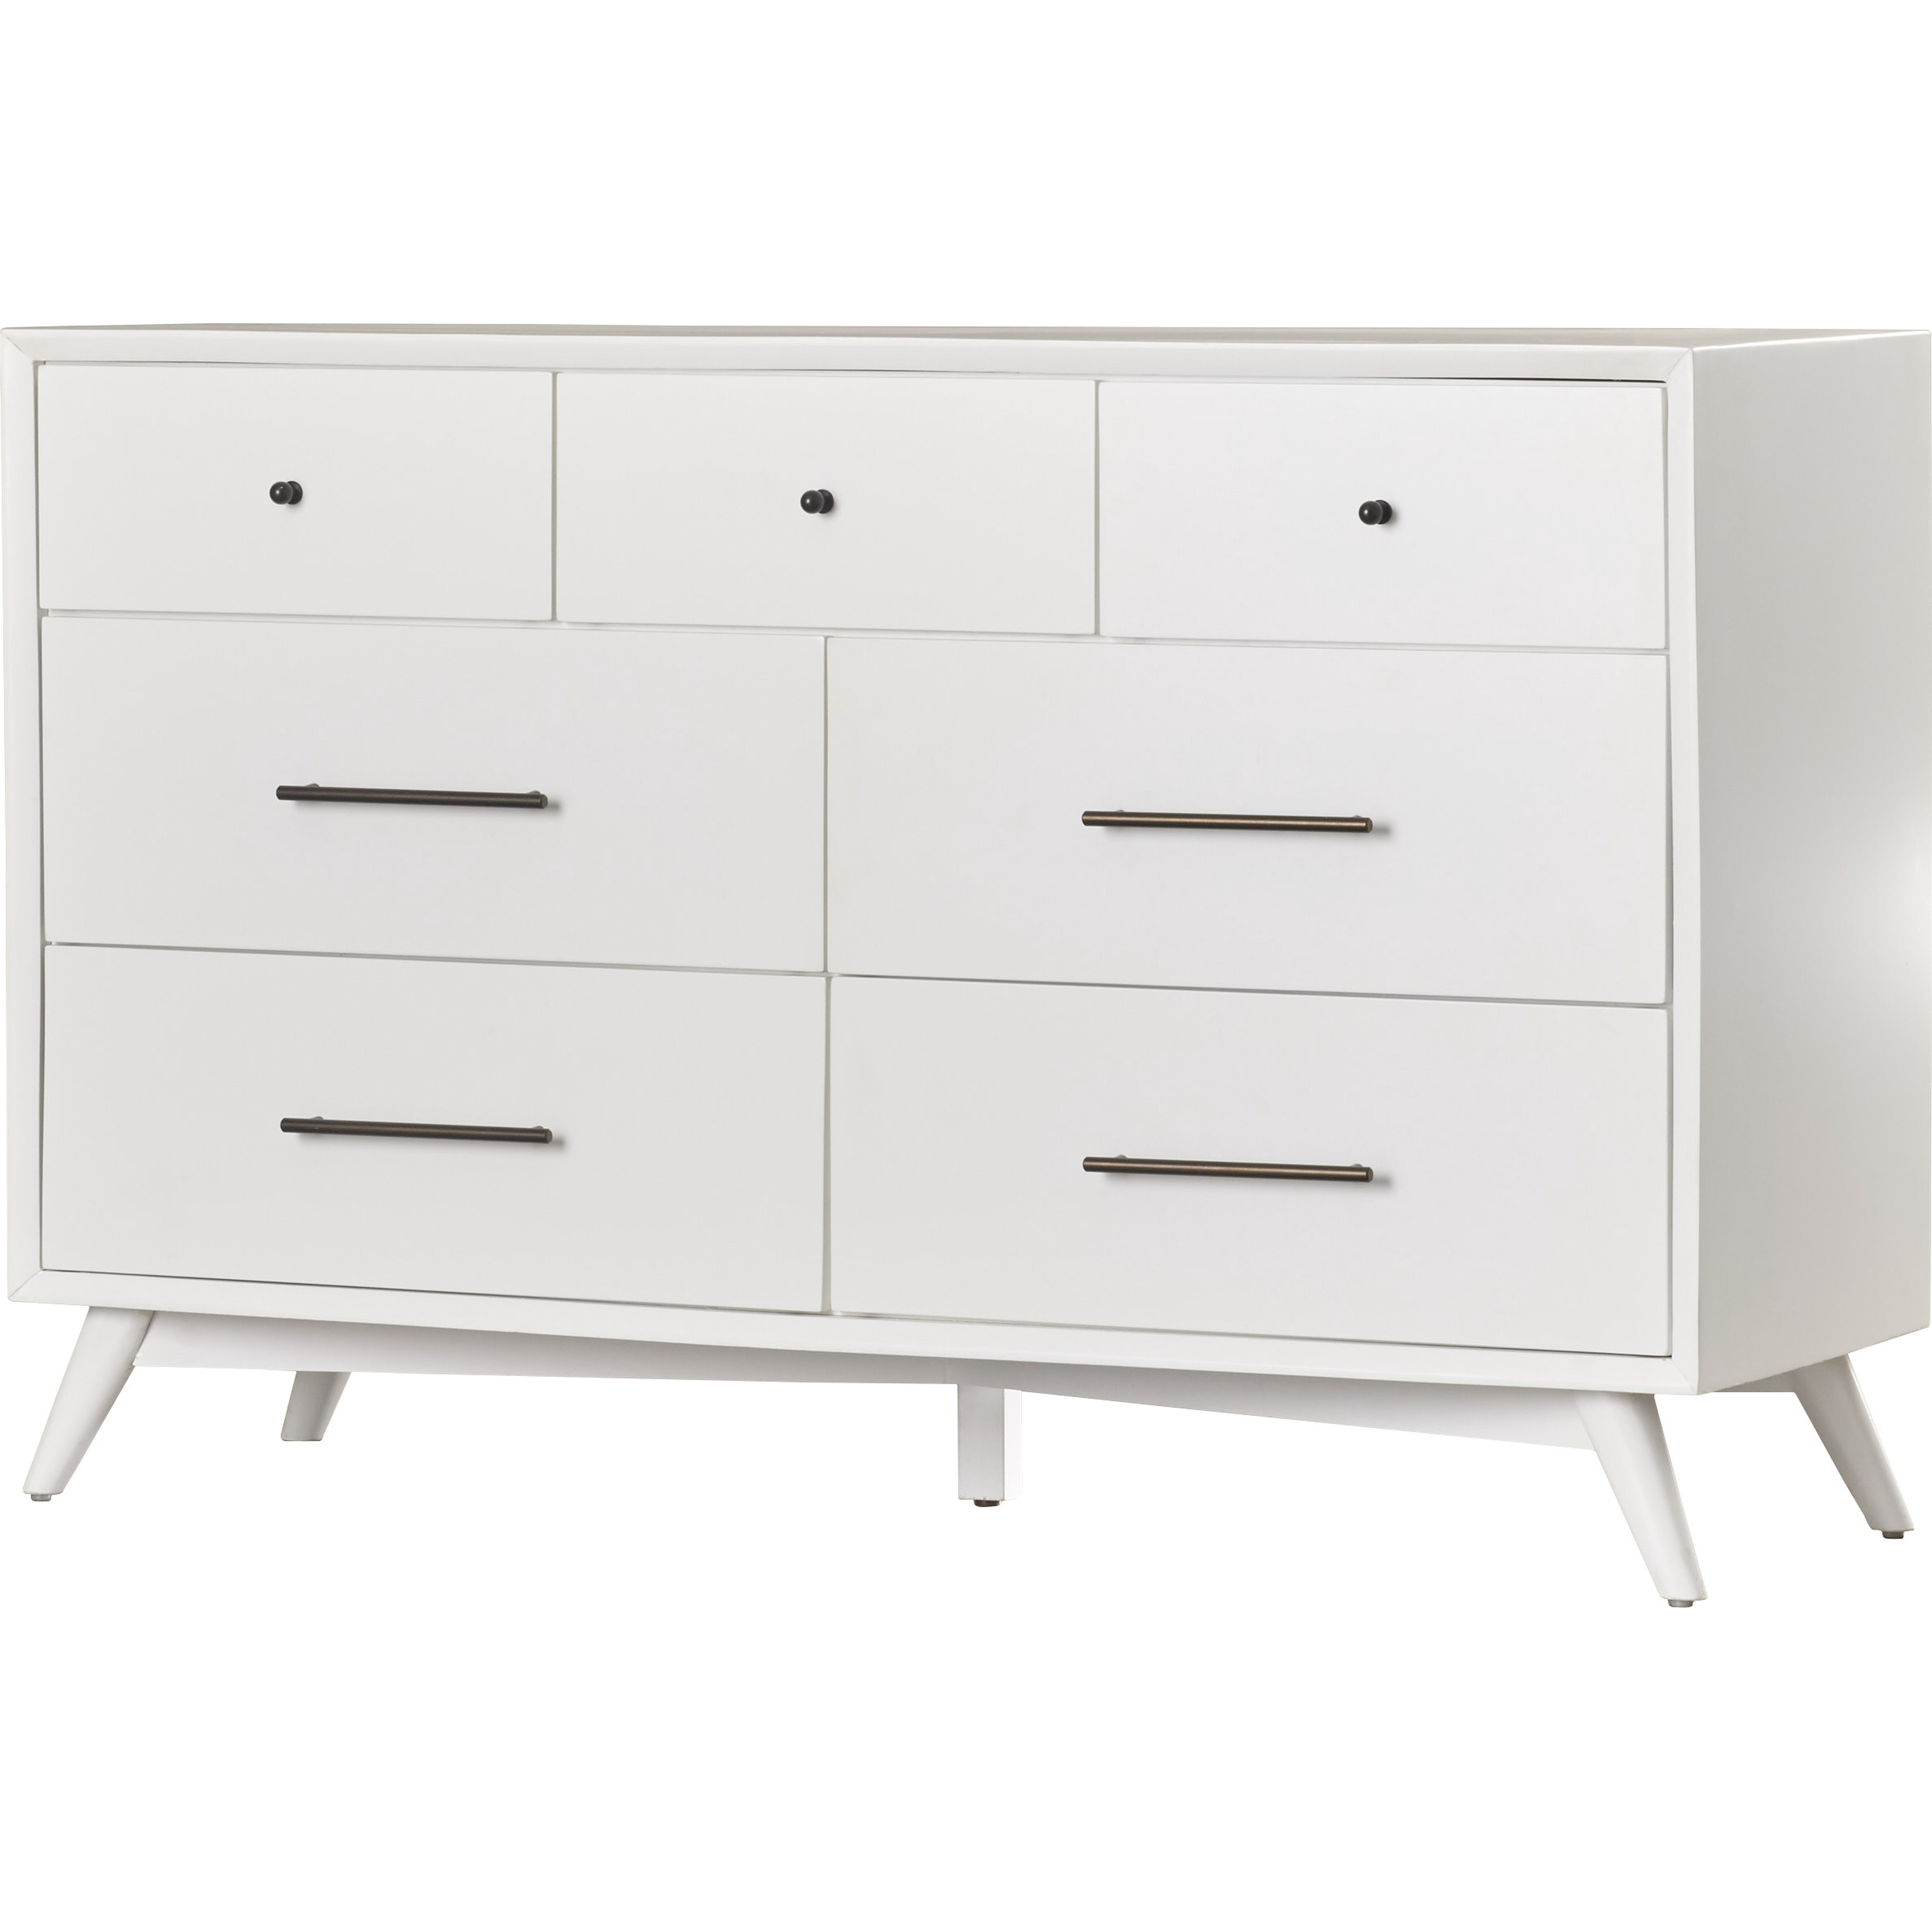 Parocela 7 Drawer Dresser - White - Wayfair